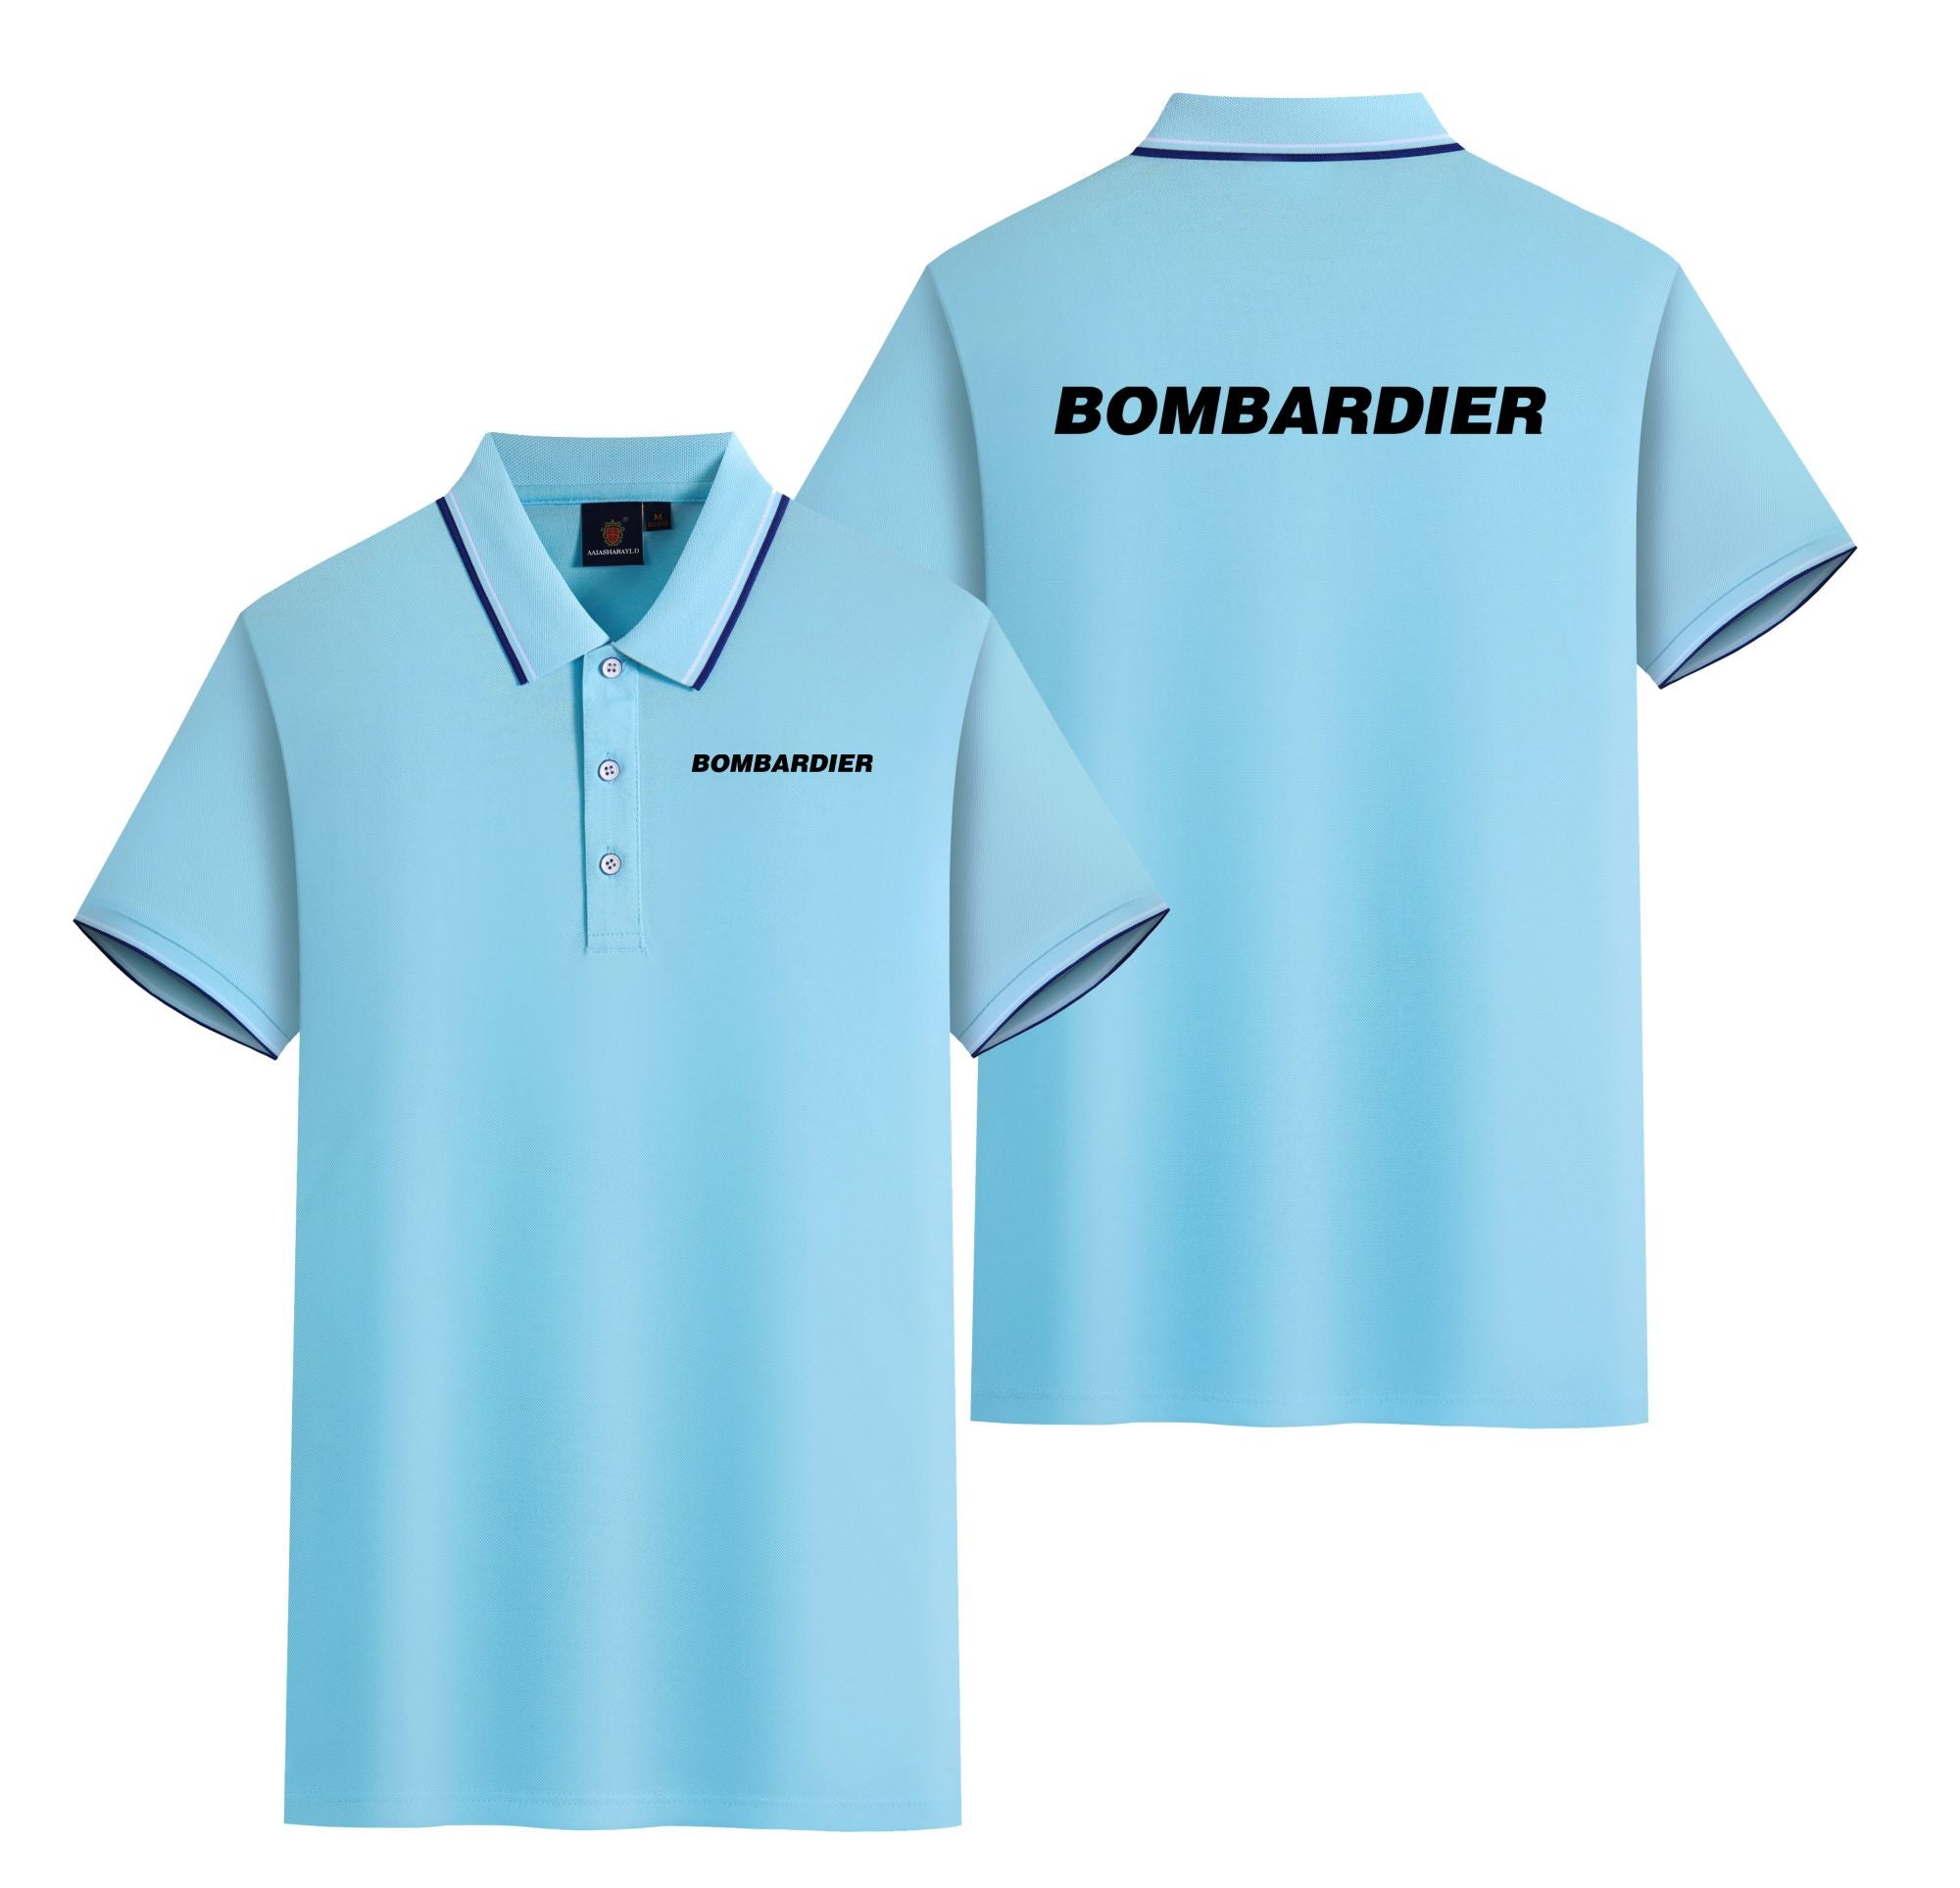 Bombardier & Text Designed Stylish Polo T-Shirts (Double-Side)